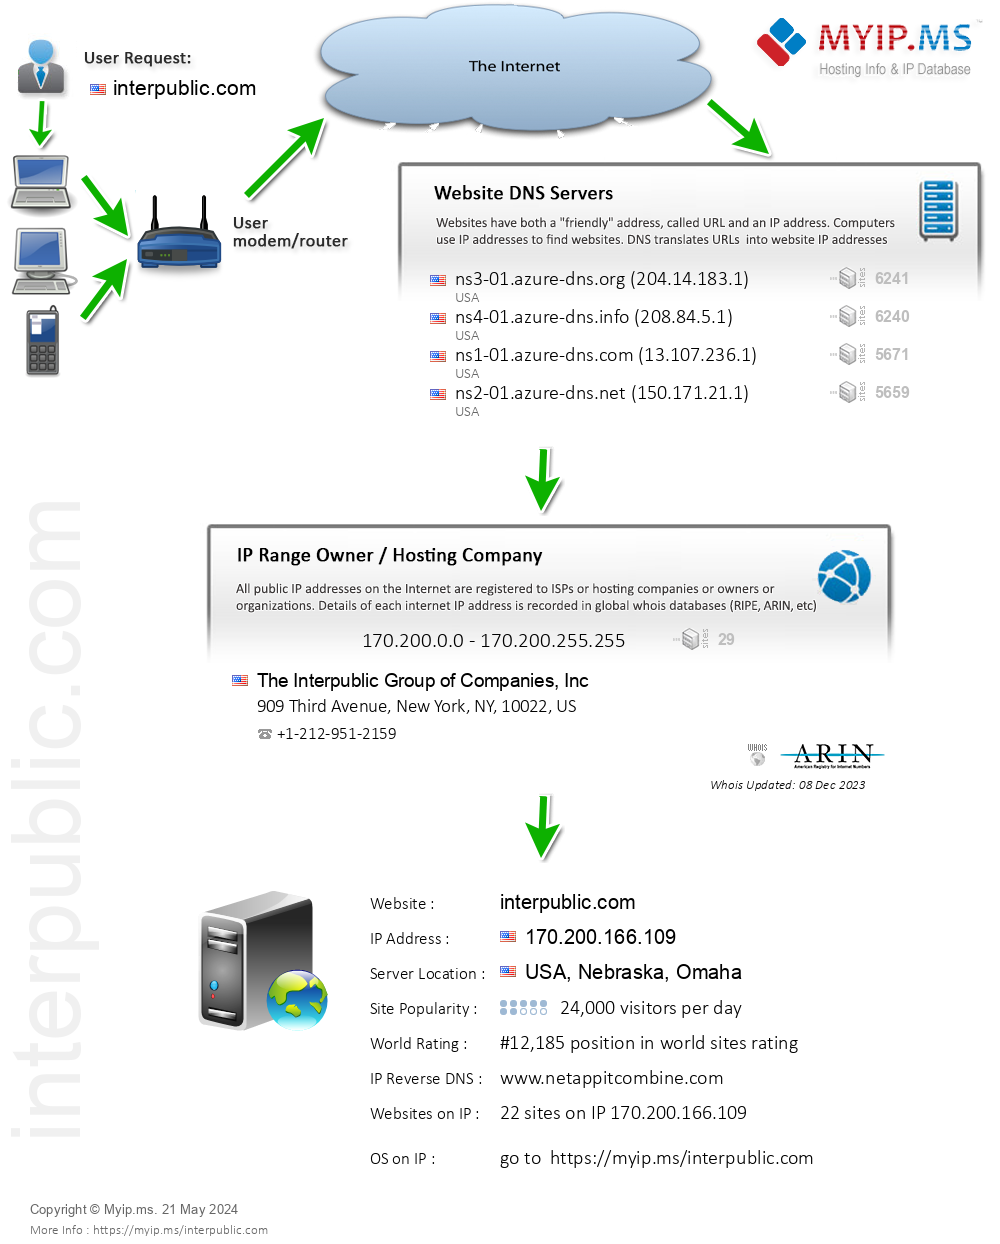 Interpublic.com - Website Hosting Visual IP Diagram